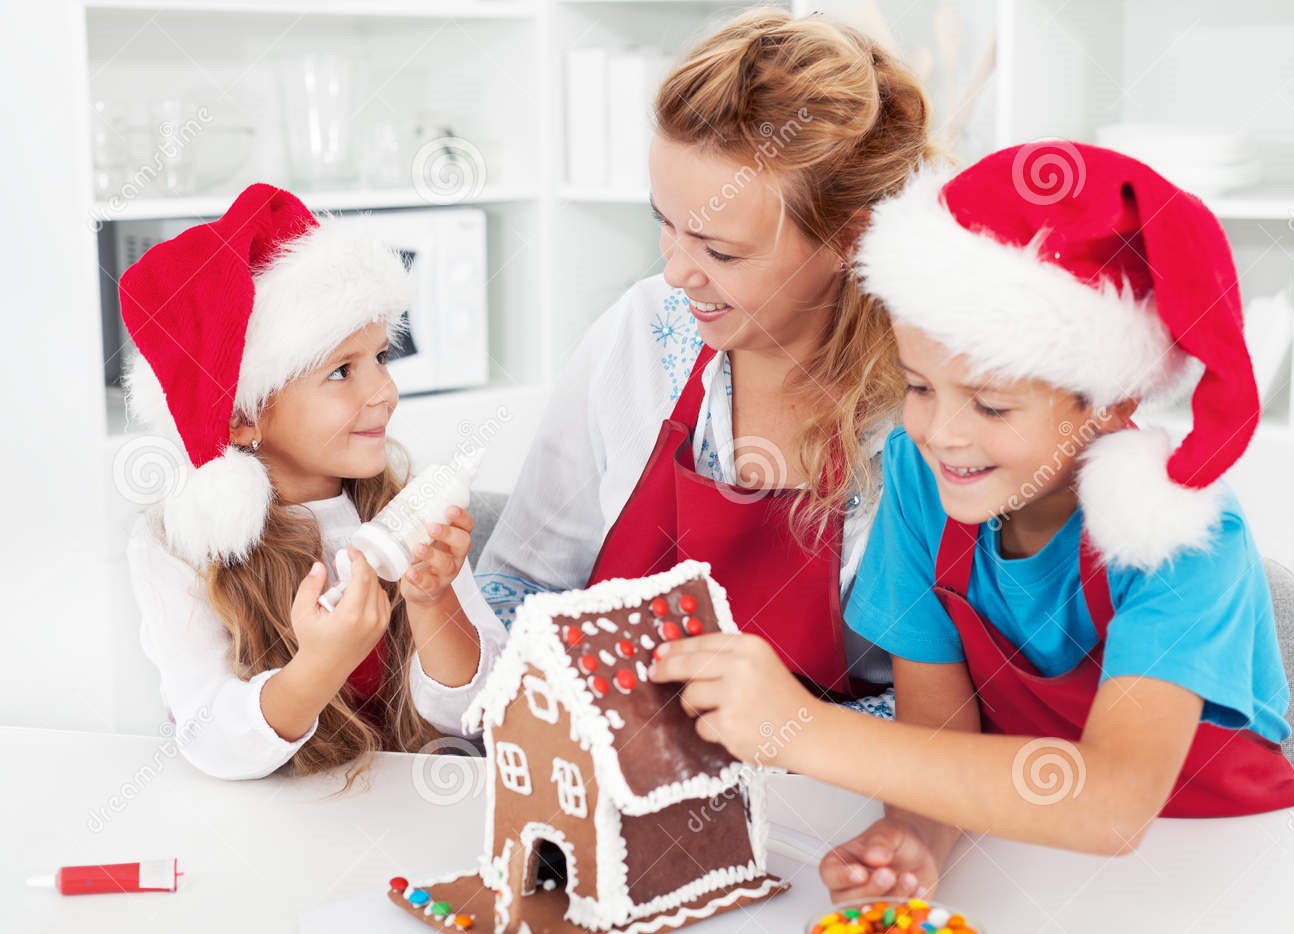 Preschoolers making a gingerbread house